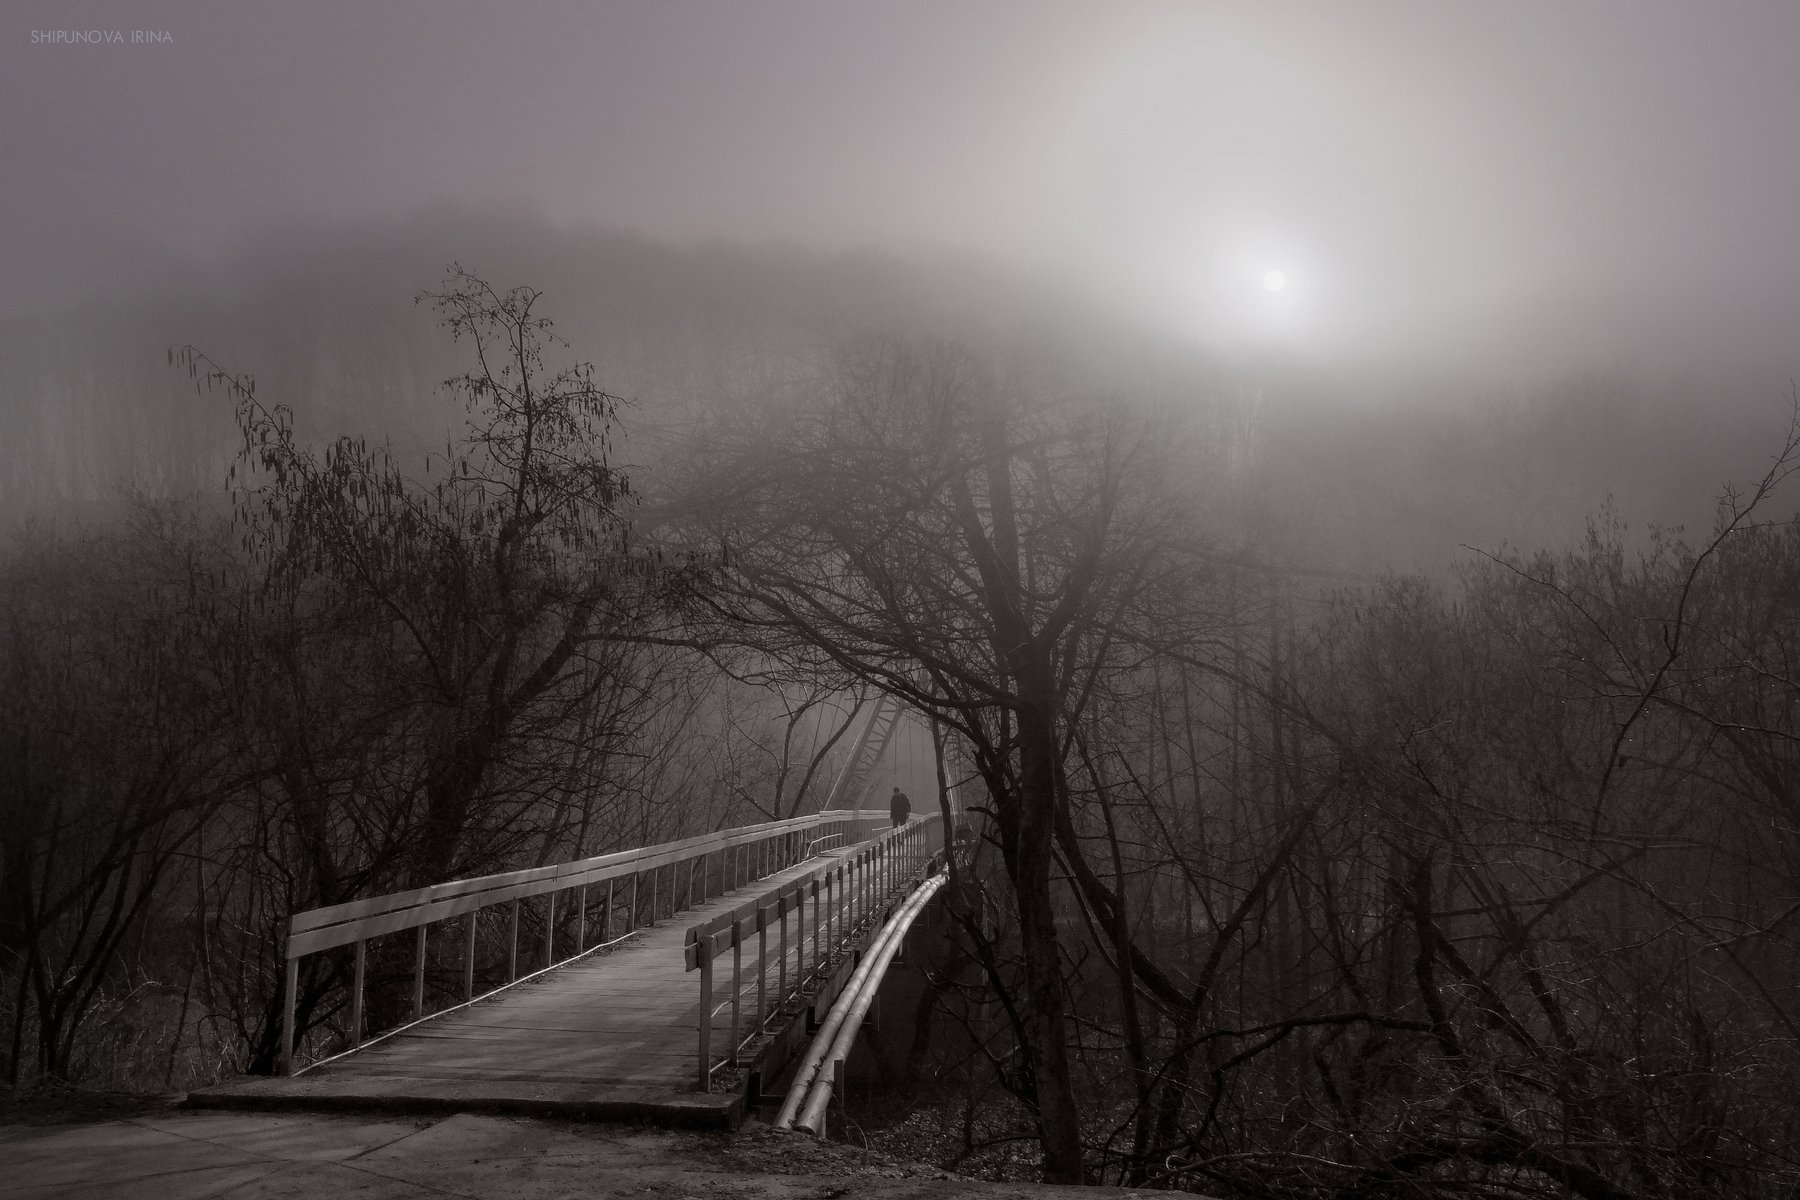 туман, солнце, мост, путник, Шипунова Ирина